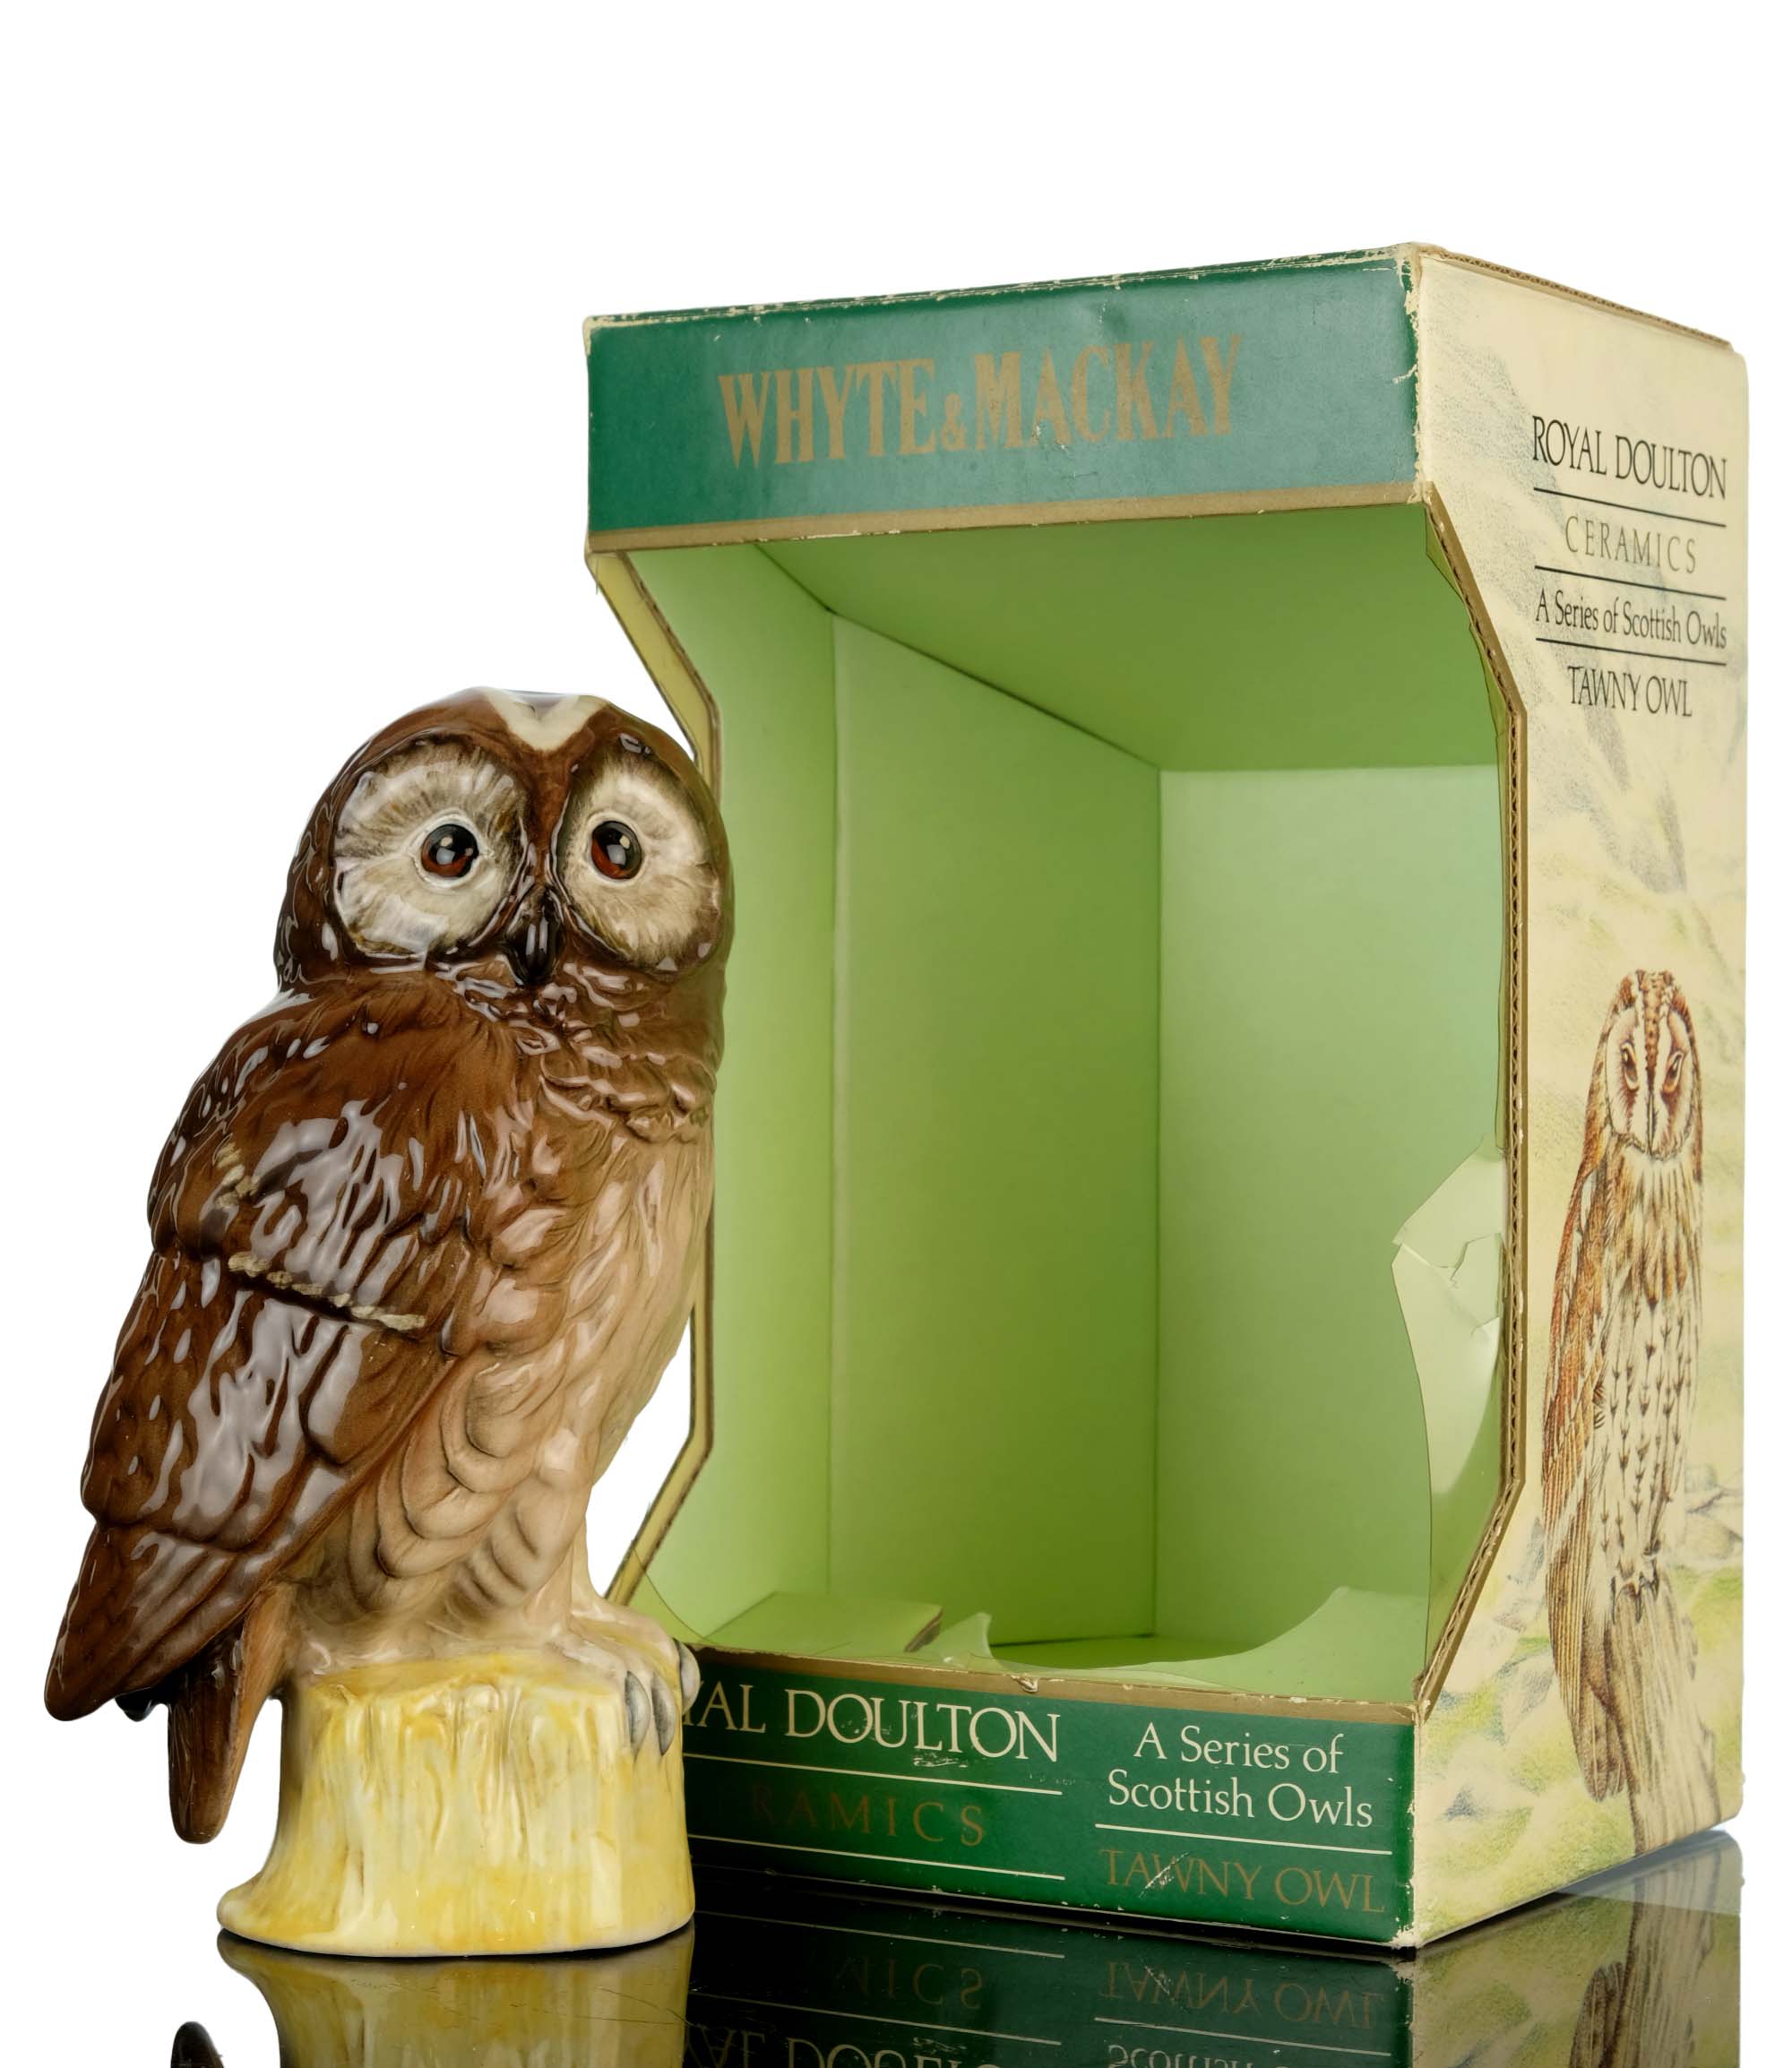 Whyte & Mackay Royal Doulton Ceramic Tawny Owl